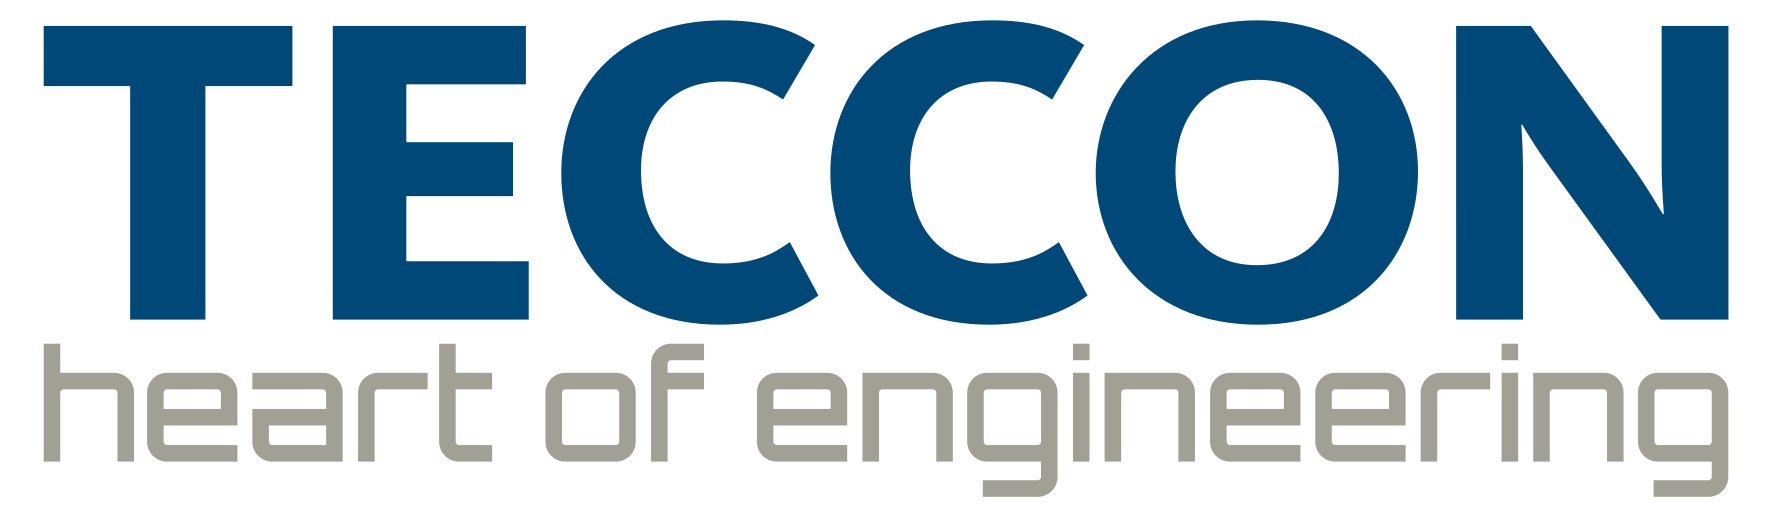 TECCON - heart of engineering